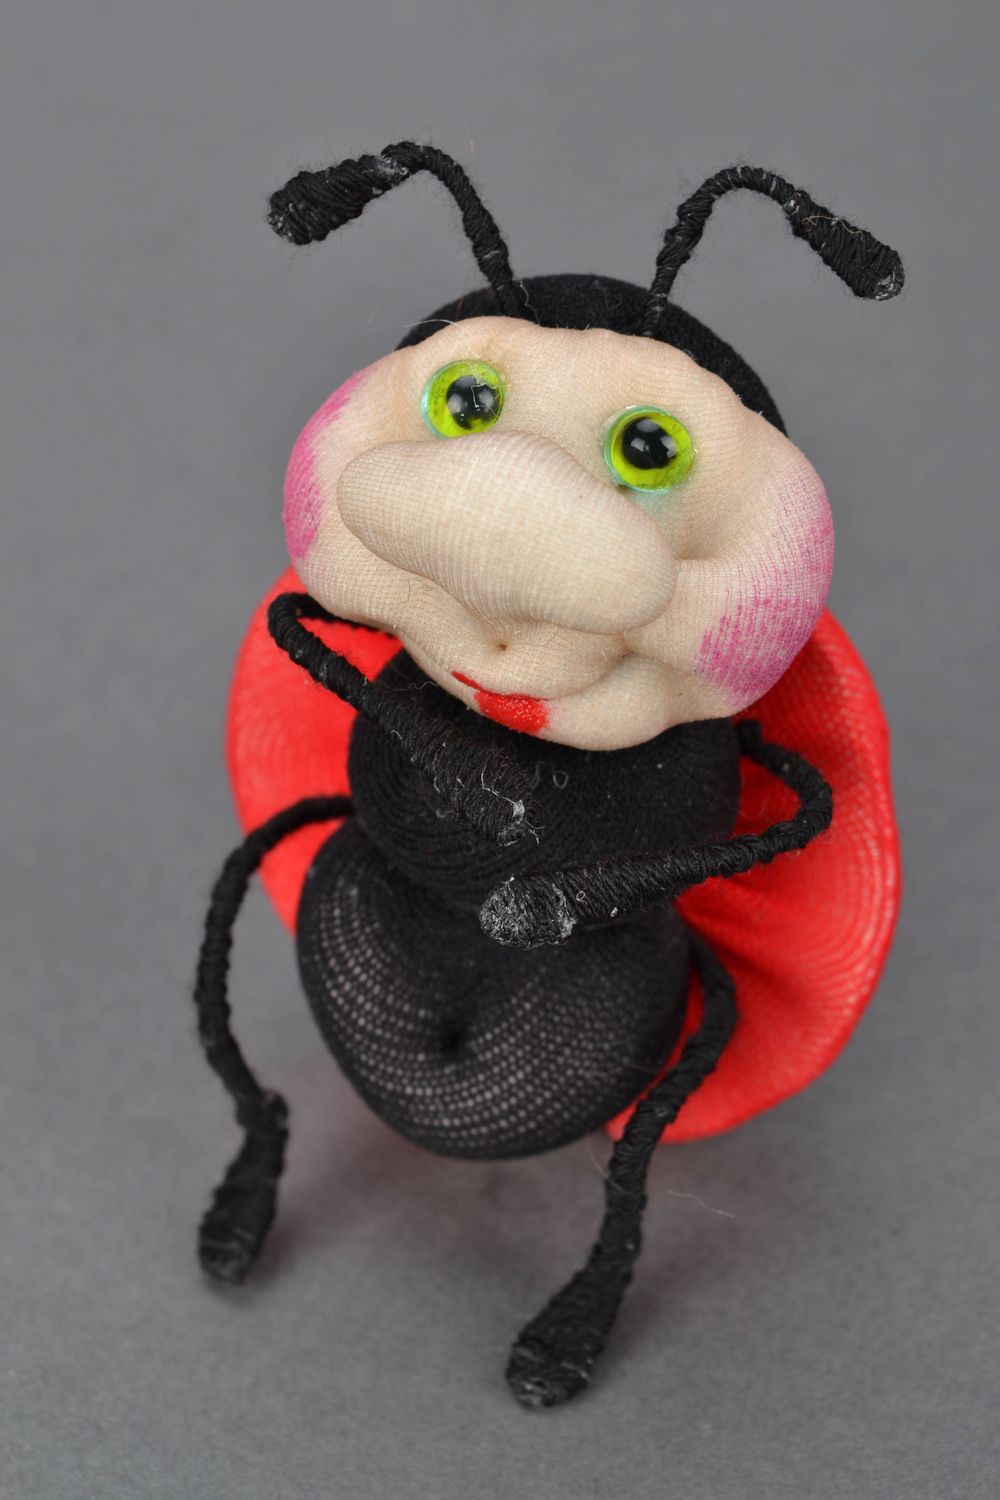 Interior capron sock doll Ladybug photo 1